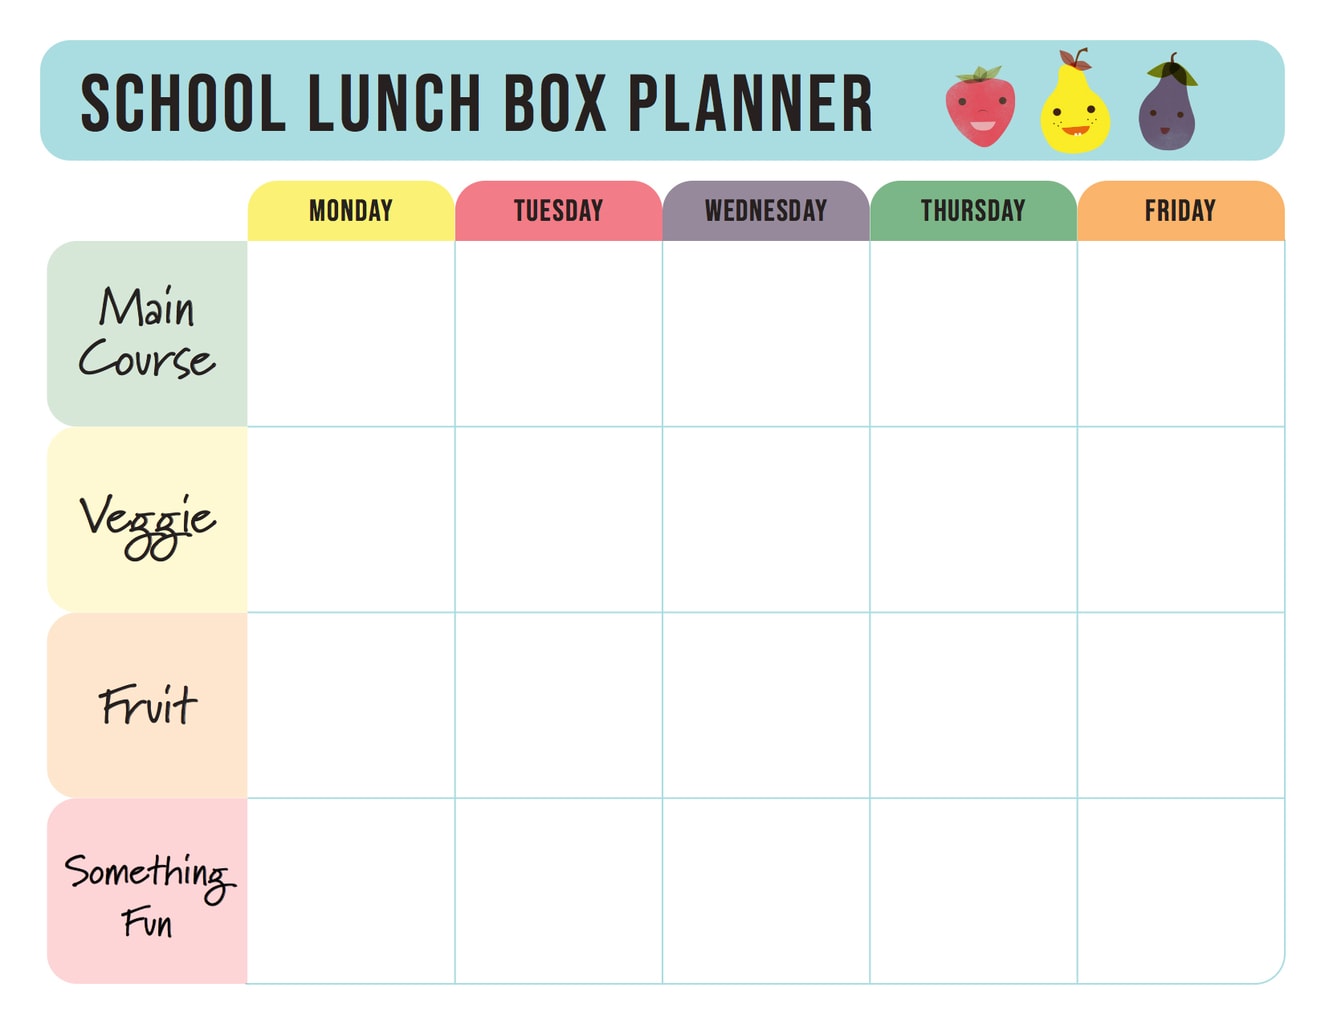 bob平台学校午餐盒规划者左侧分类主课、蔬菜、水果和趣事顶端有学周日-周一、周二、周三、周四和周五